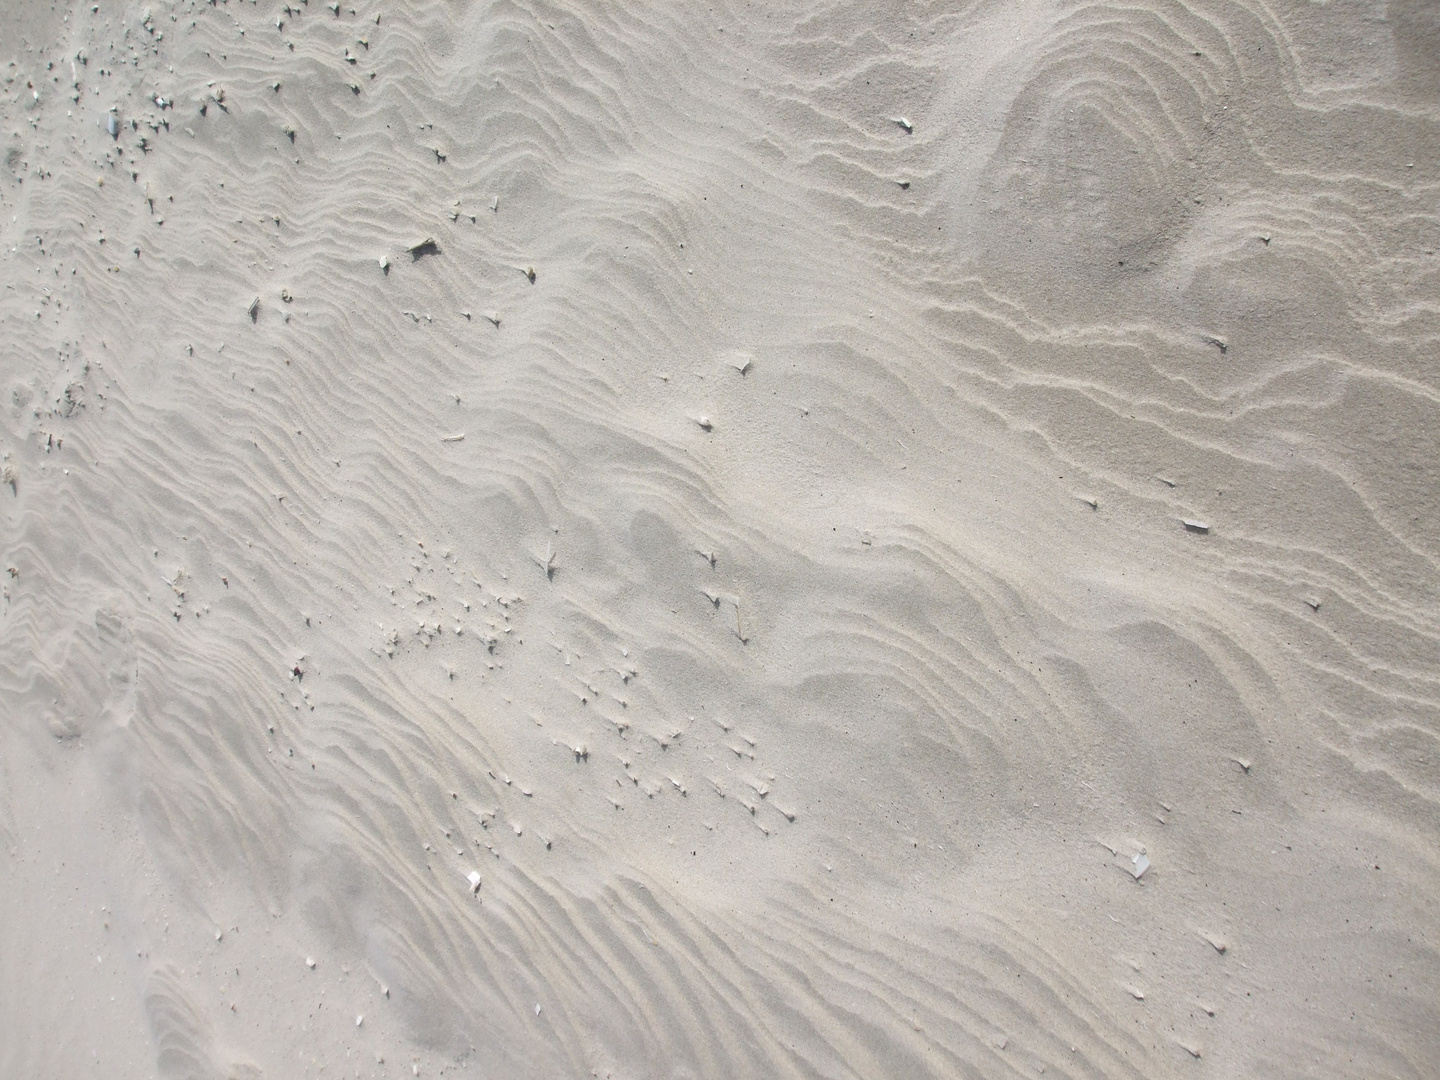 Sandmuster am Strand